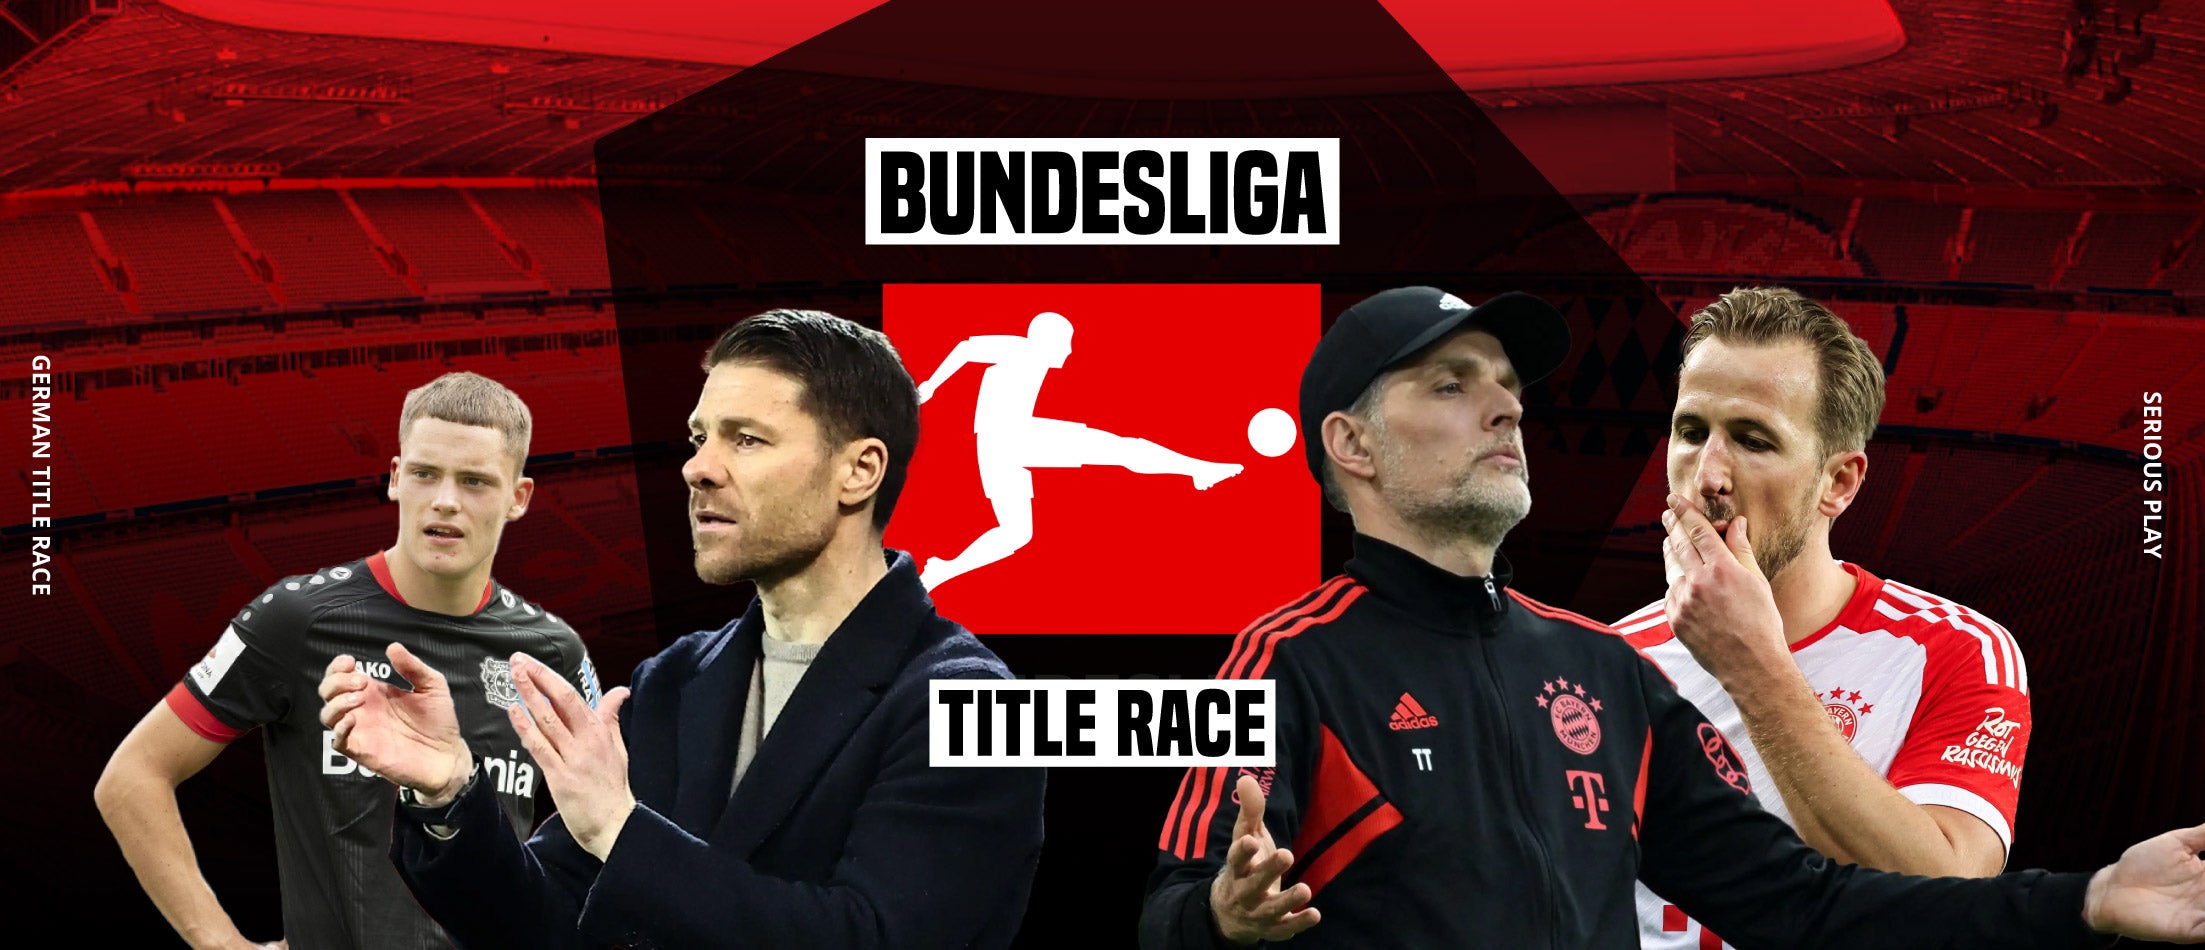 Bundesliga- Bayern Munich and Bayer Leverkusen Title Race